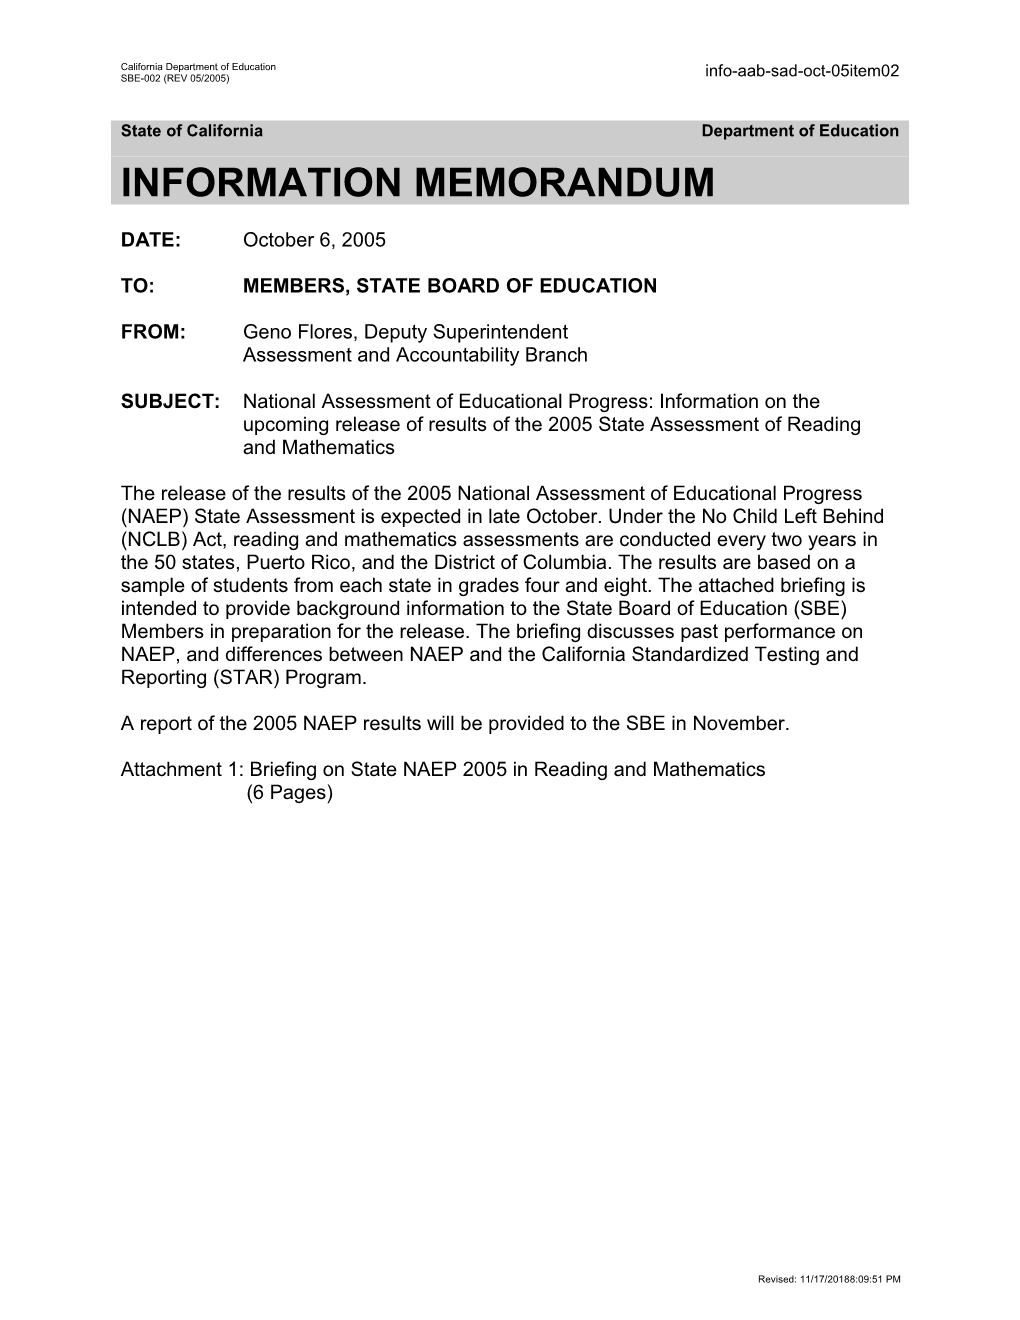 October 2005 SAD Item 2 - Information Memorandum (CA State Board of Education)